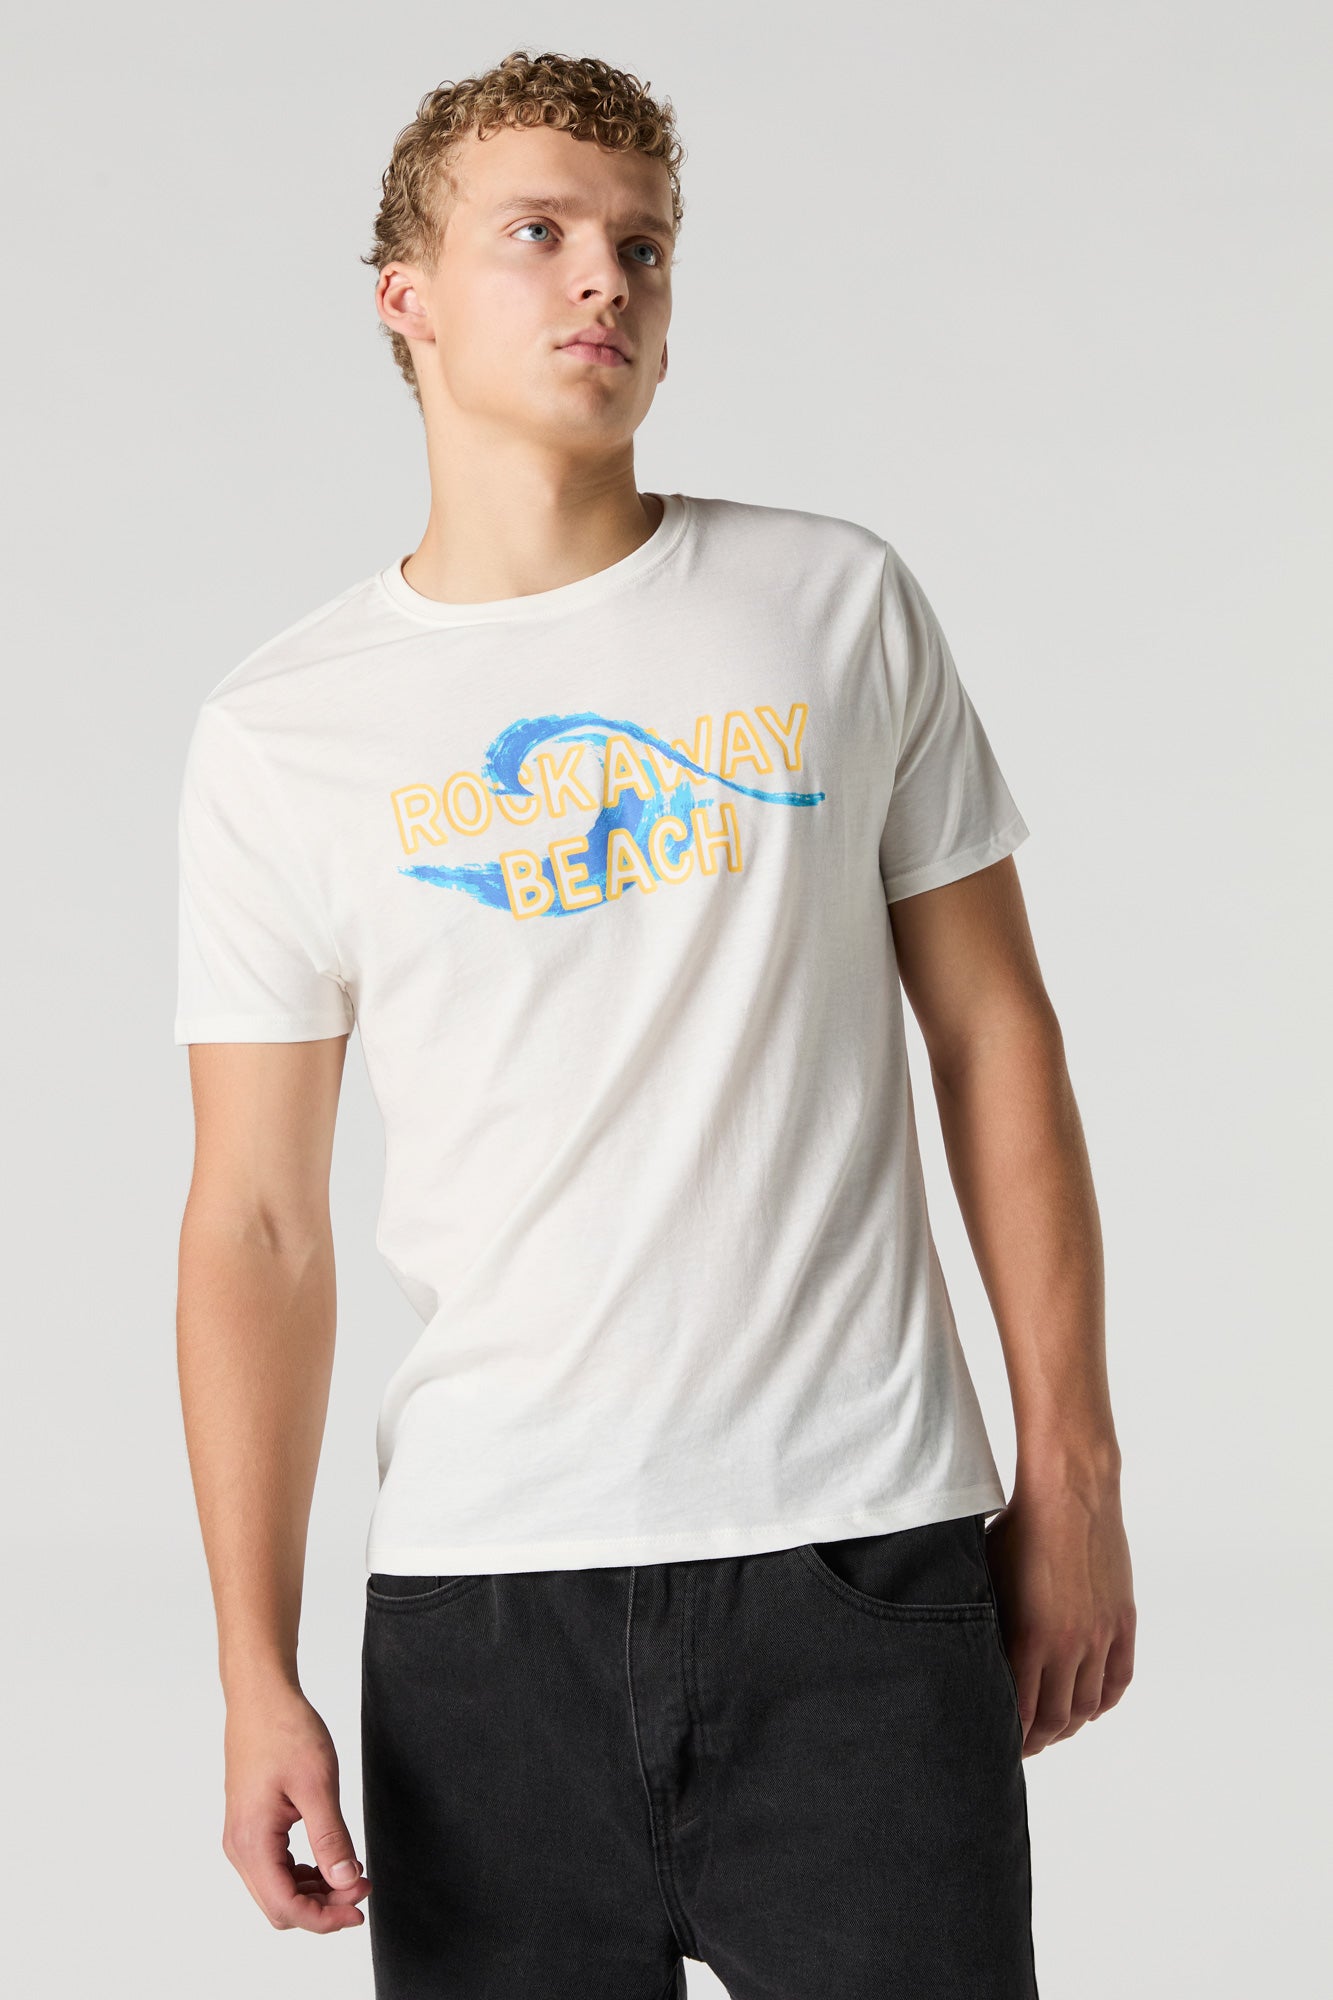 Rockaway Beach Graphic T-Shirt